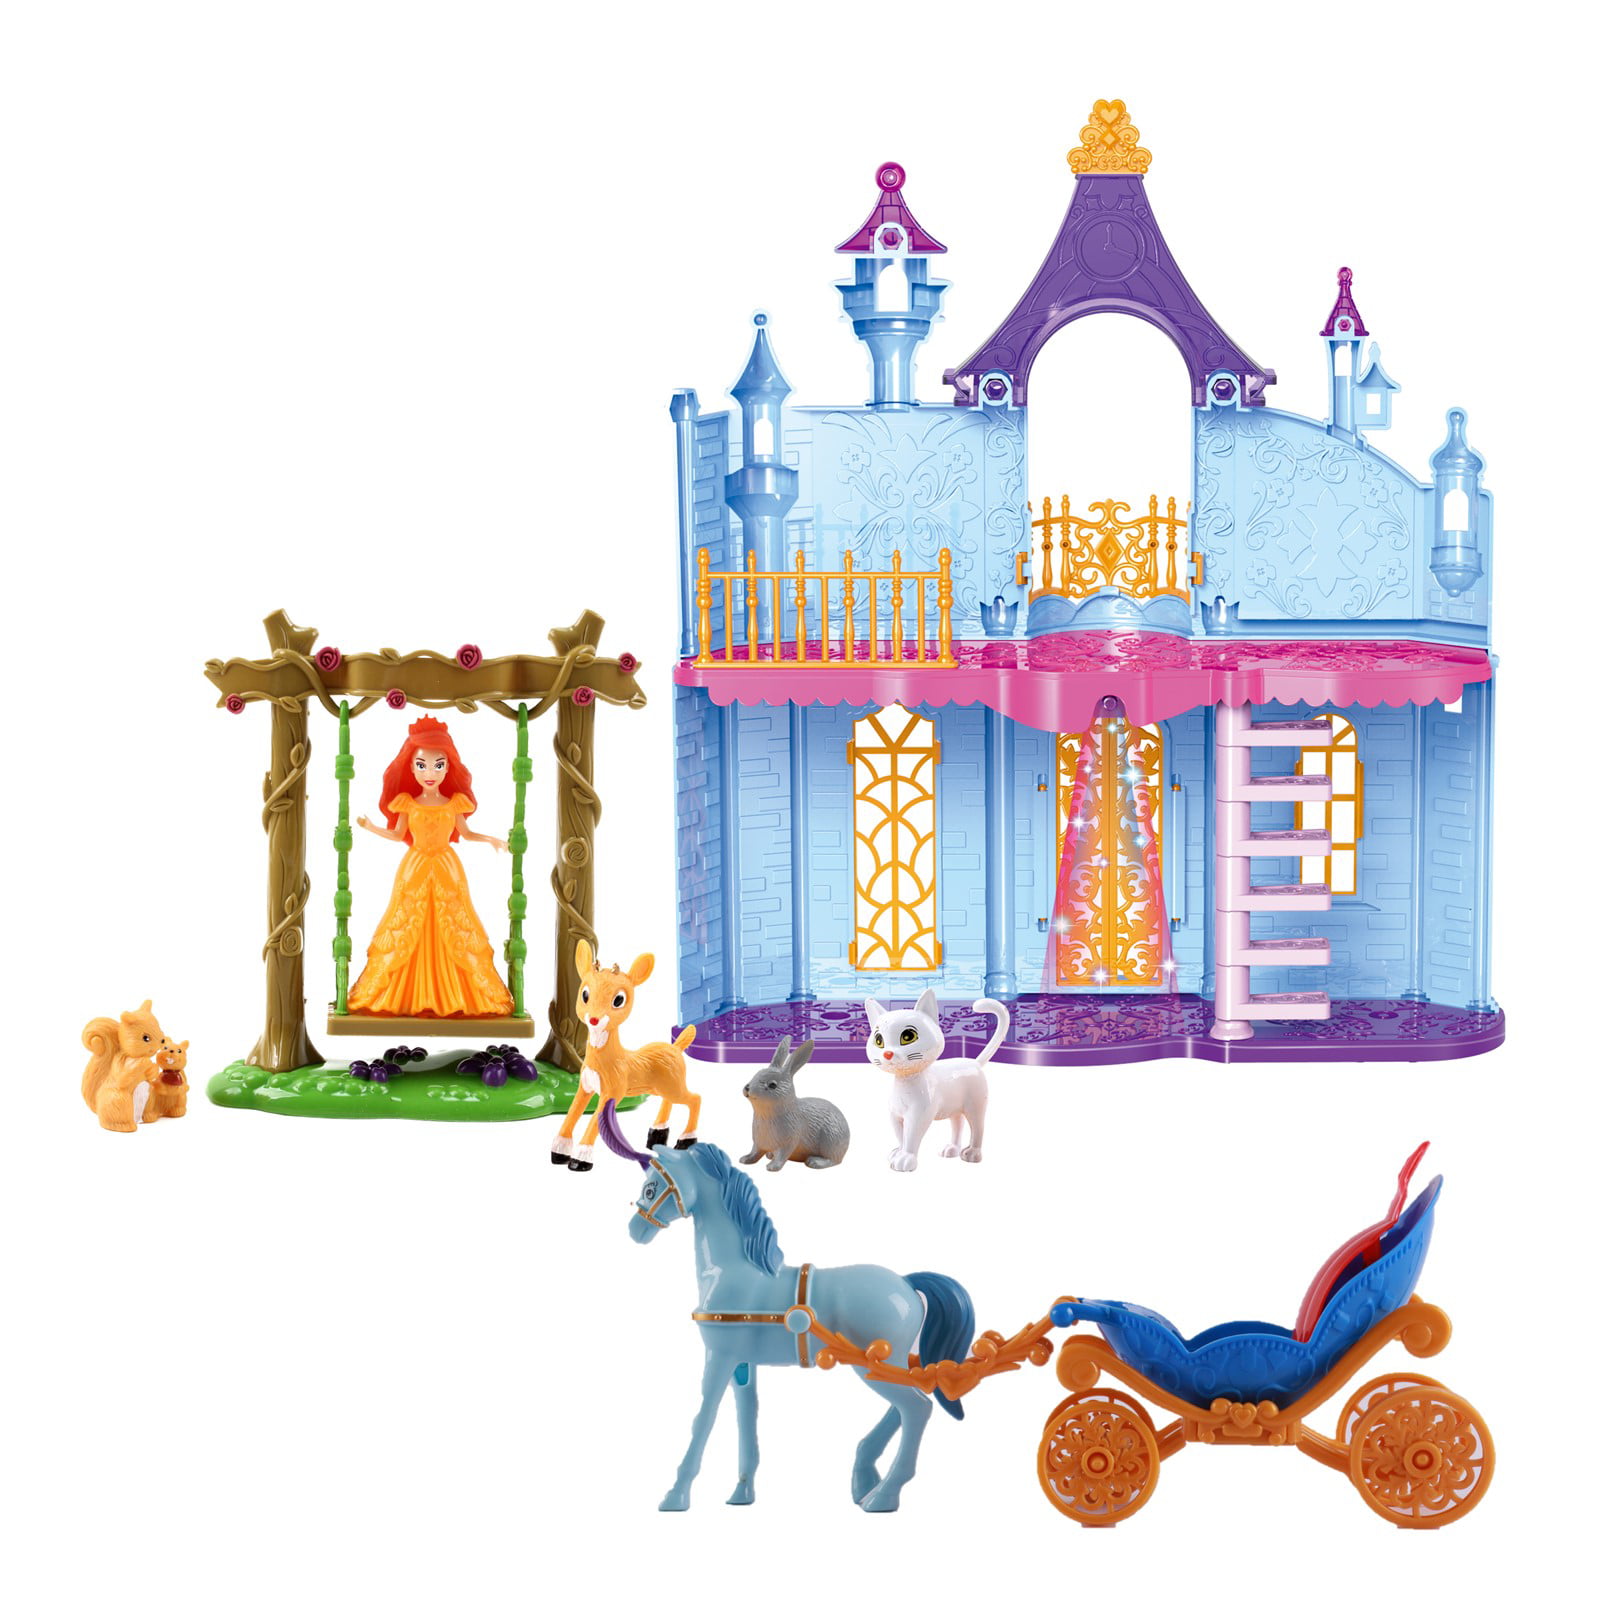 Play Princess Pet Castle  Free Online Games. KidzSearch.com